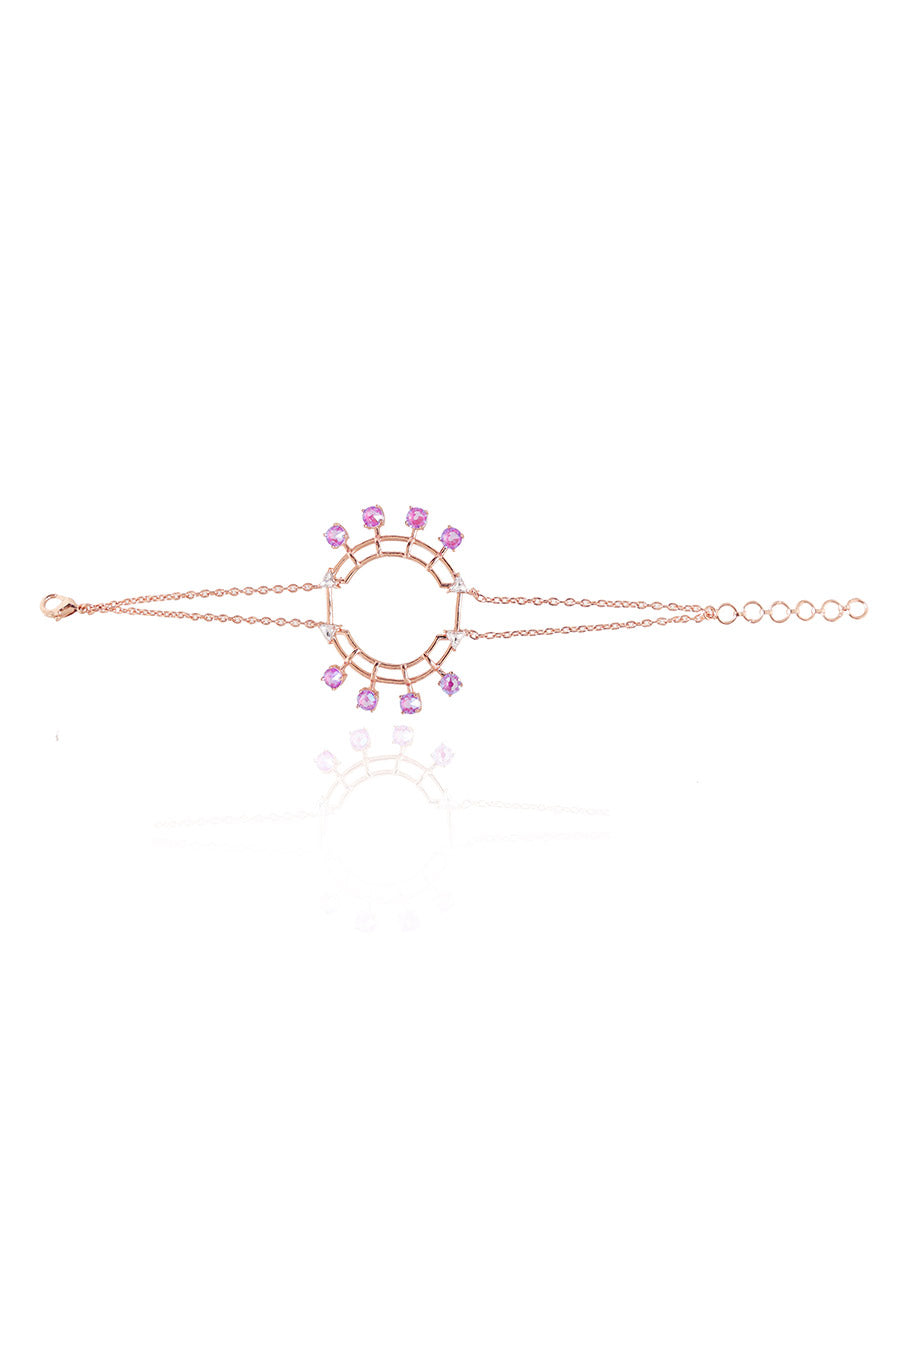 Colored Popsicles - Lilac Swarovski Tennis Bracelet